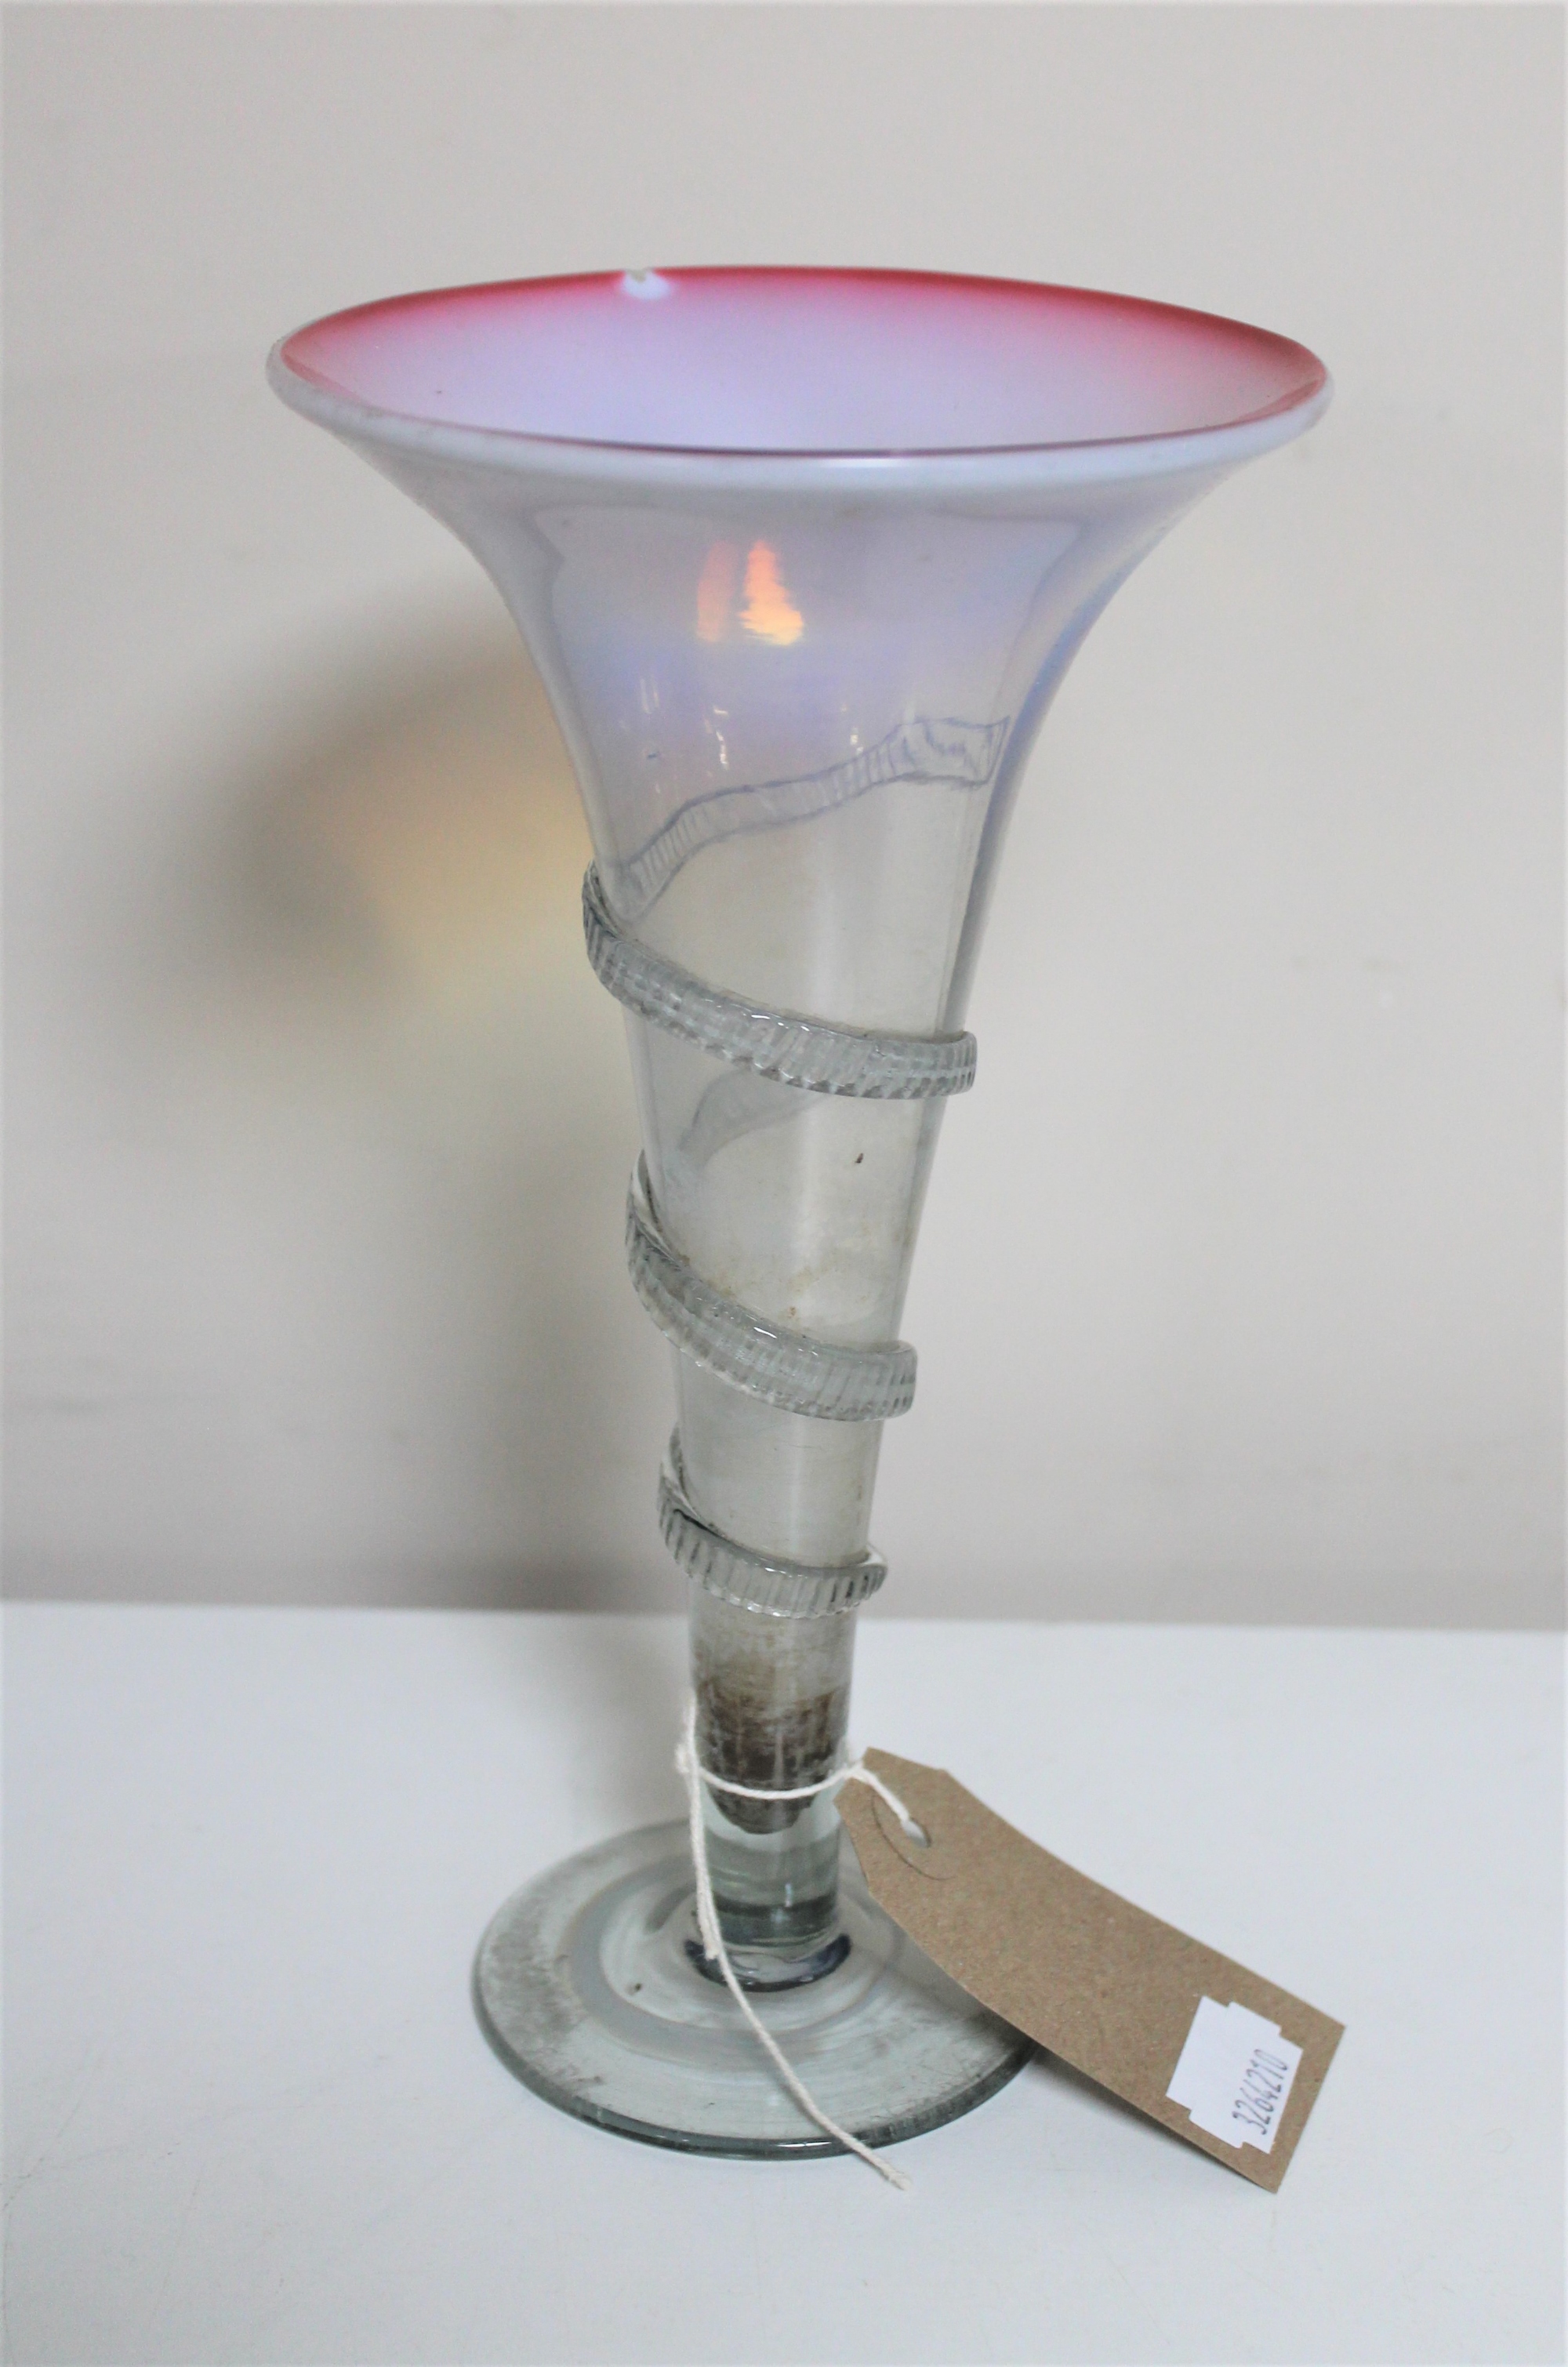 A Victorian glass twist stem vase,